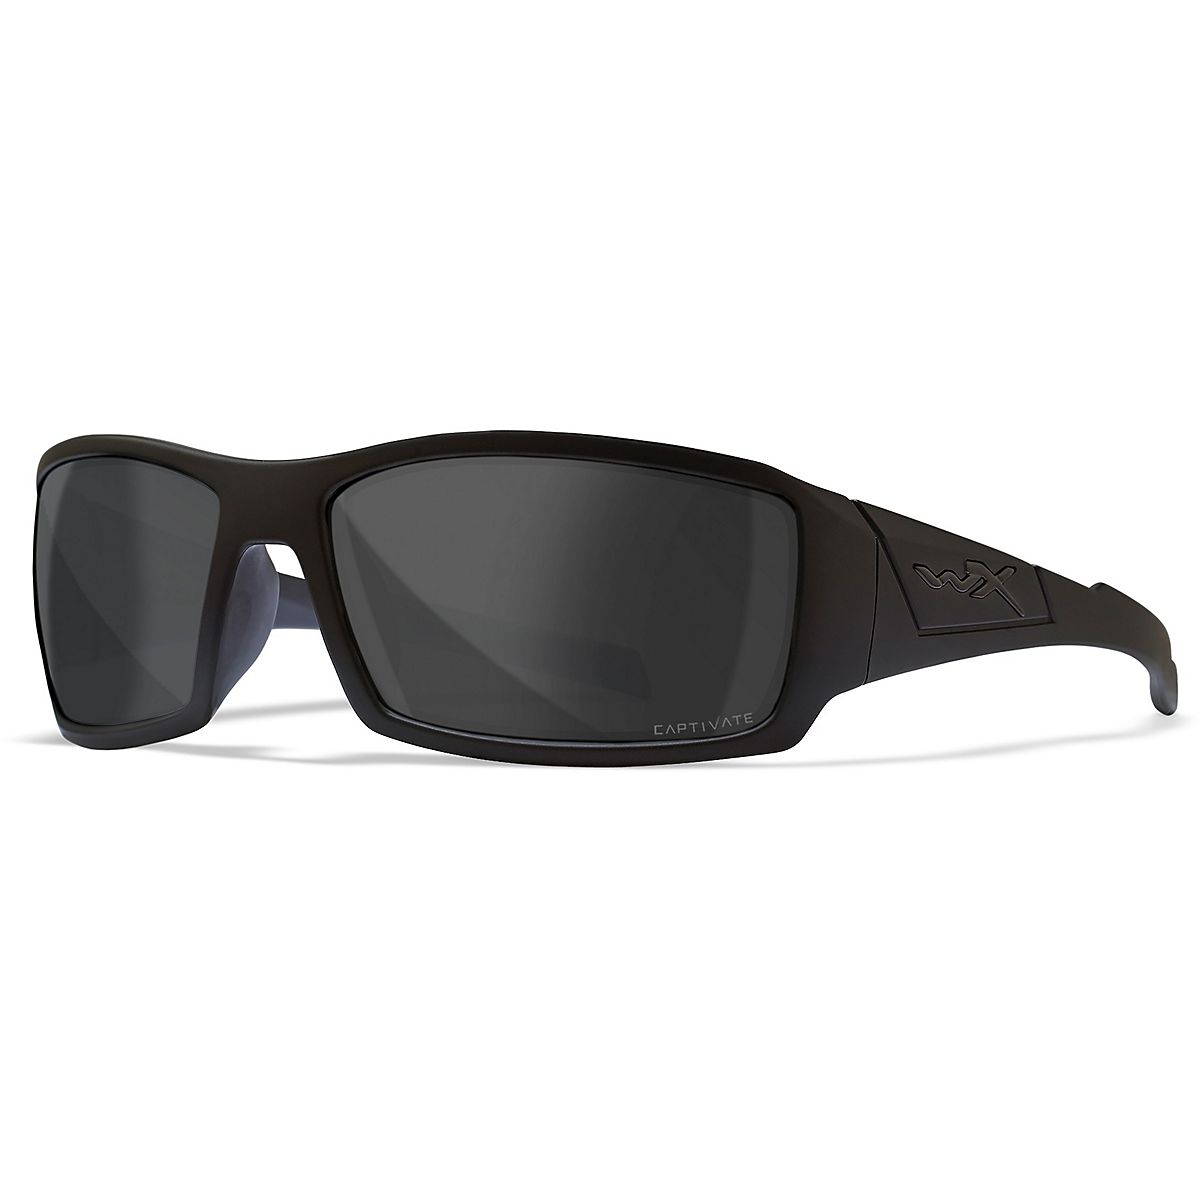 Wiley X Twisted Captivate Polarized Sunglasses | Academy